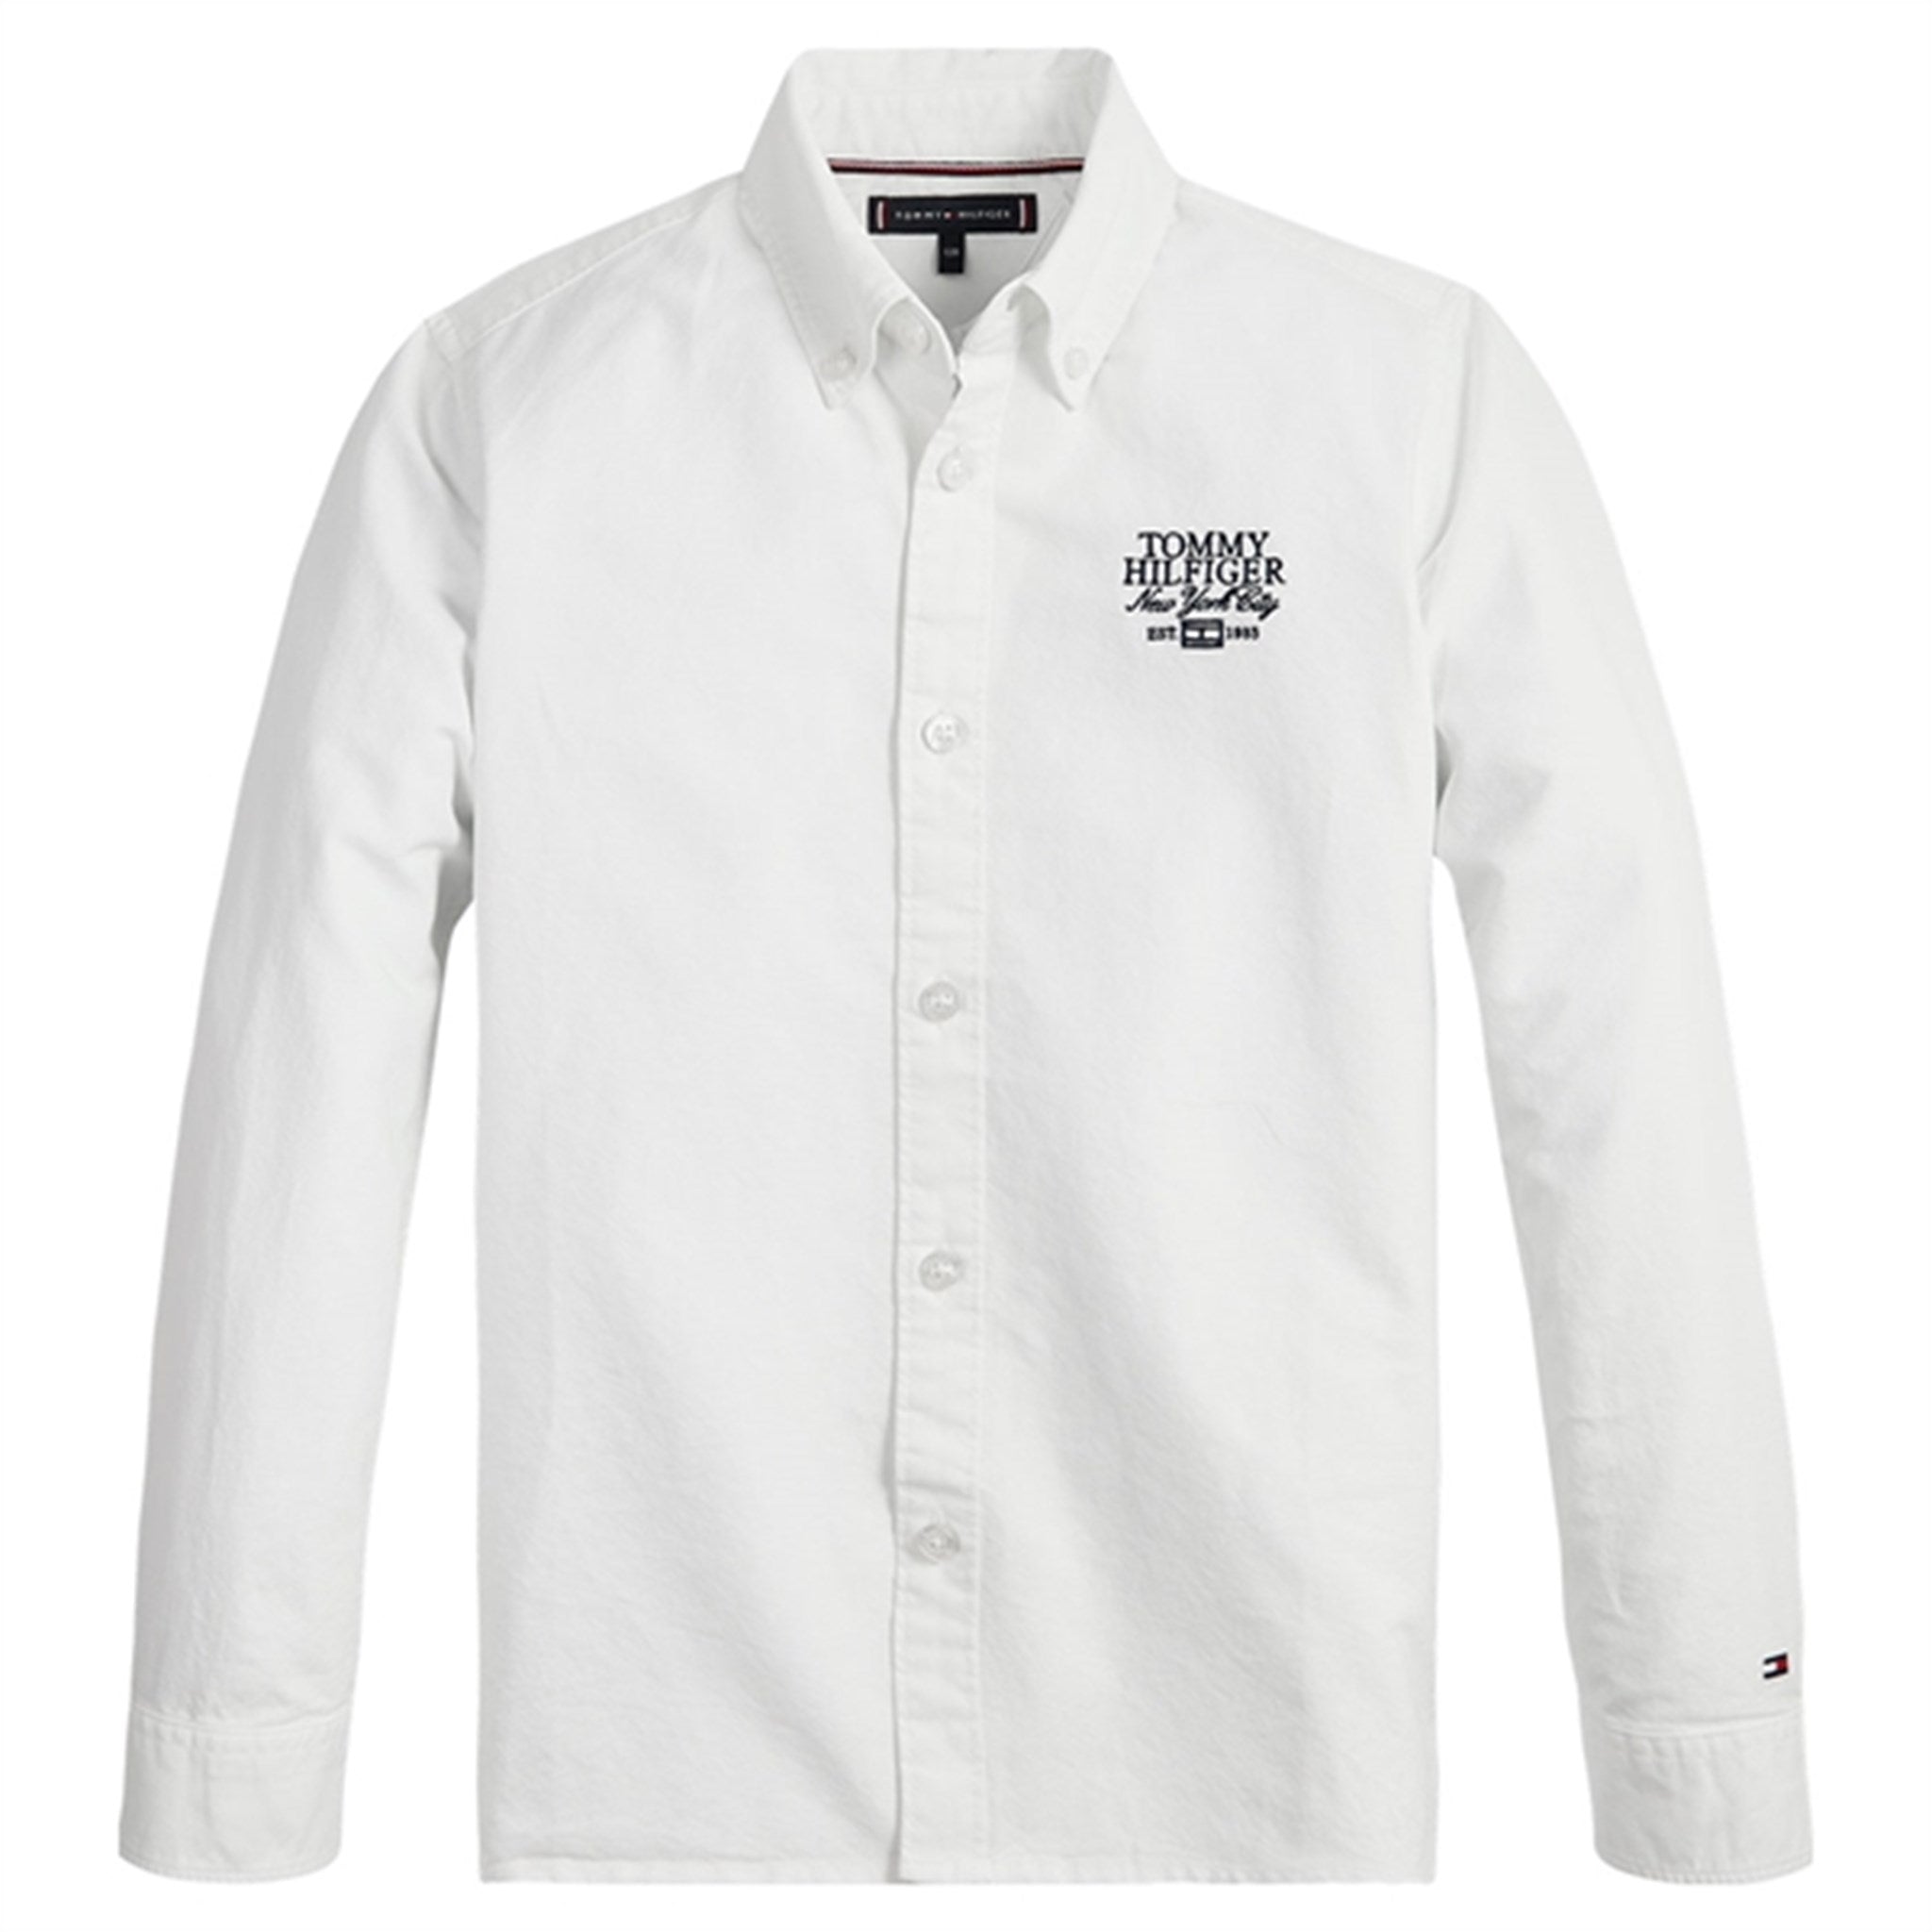 Tommy Hilfiger Branded Oxford Shirt White